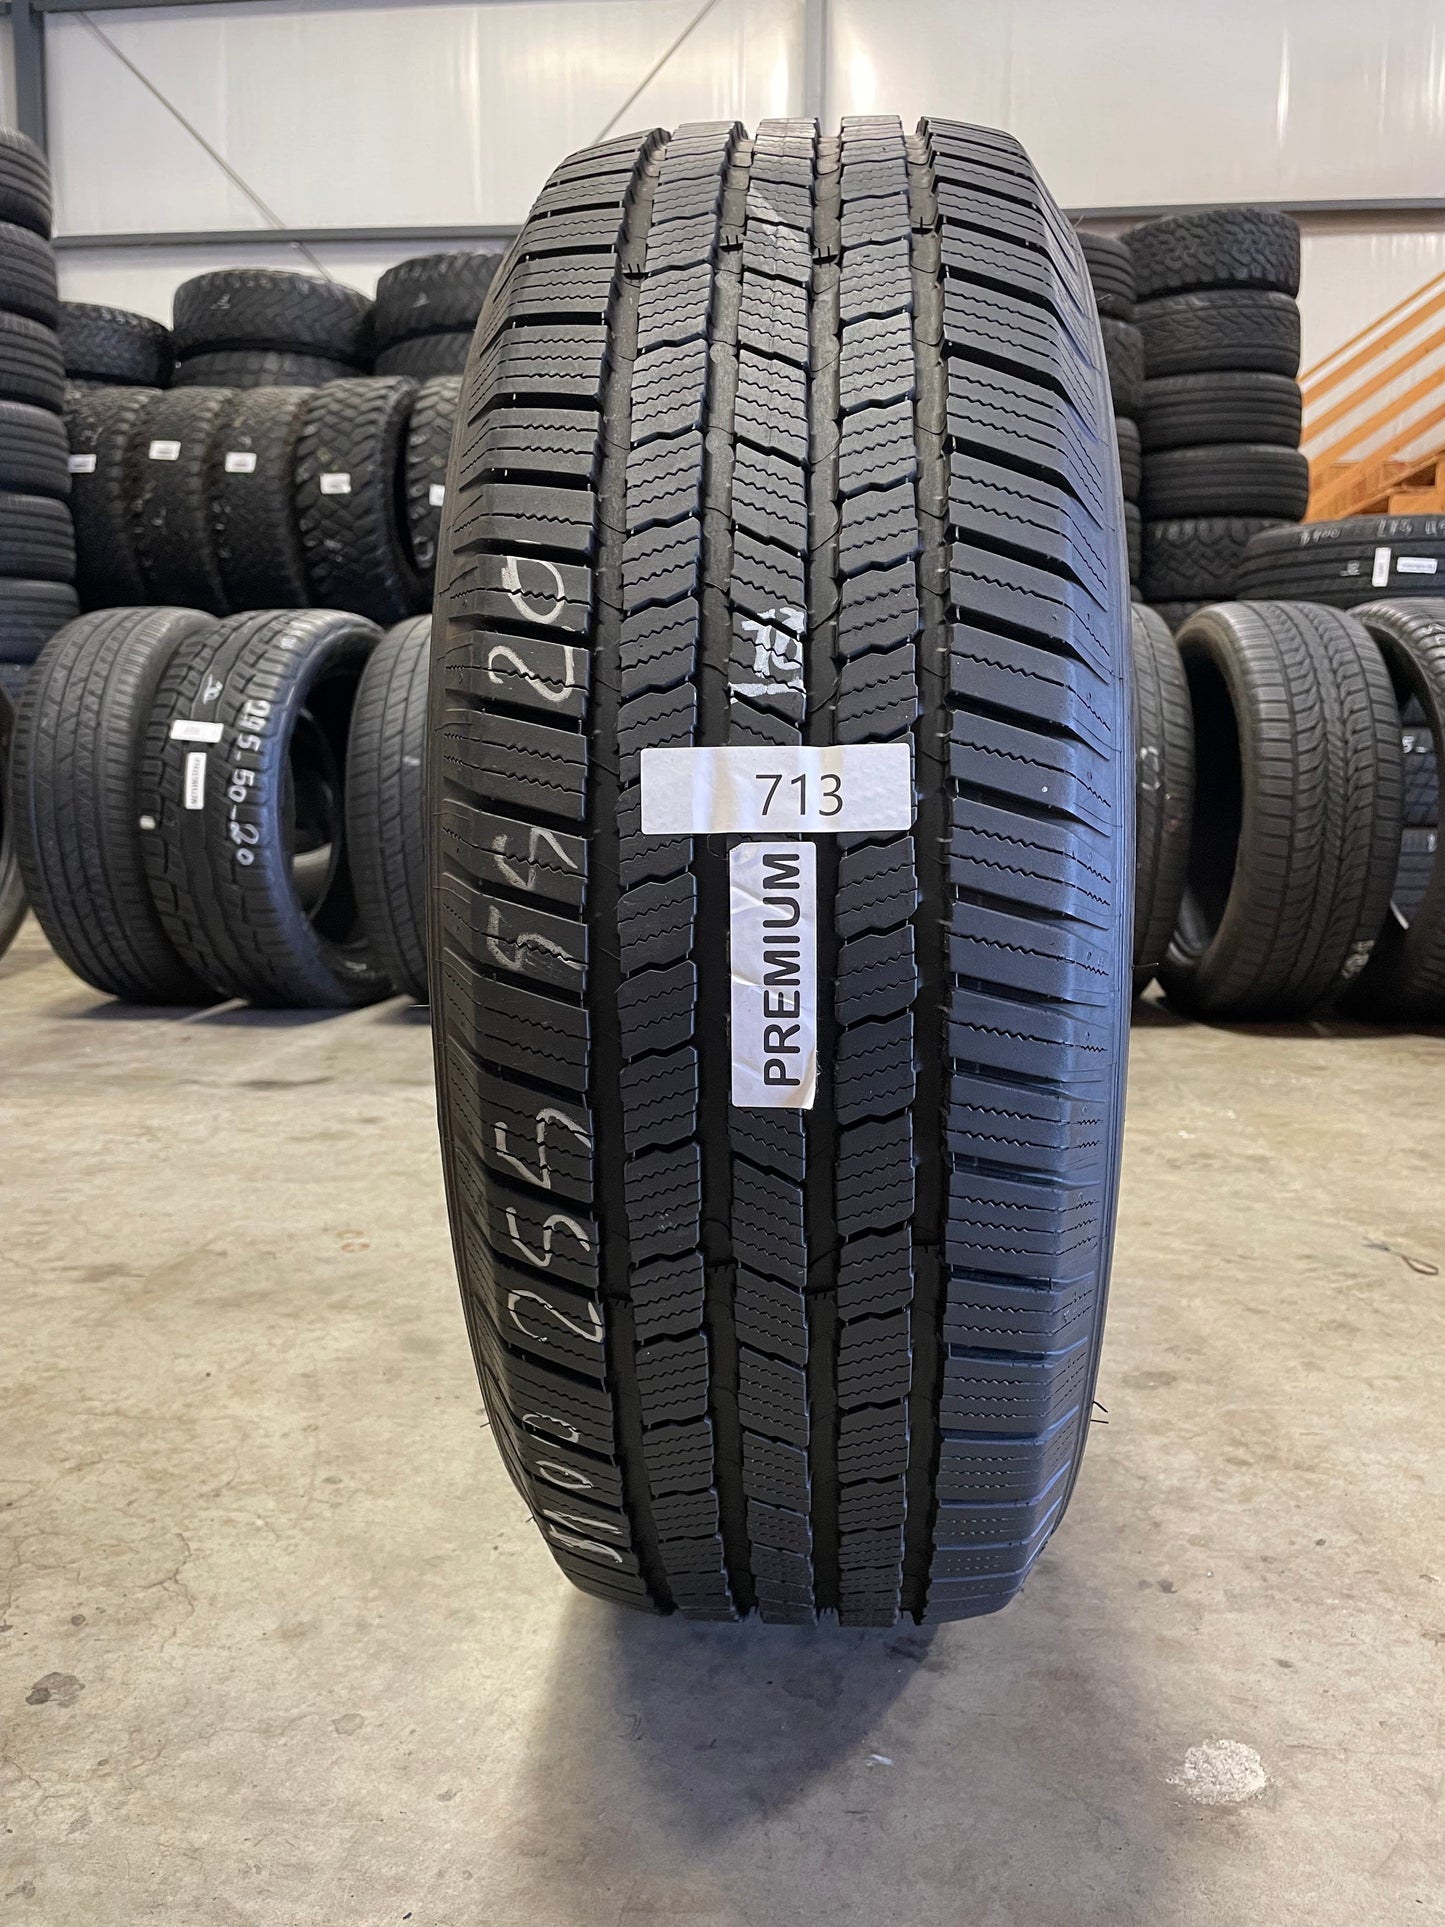 SINGLE 245/50R20 Michelin Defender LTX M/S 110 H XL - Premium Used Tires